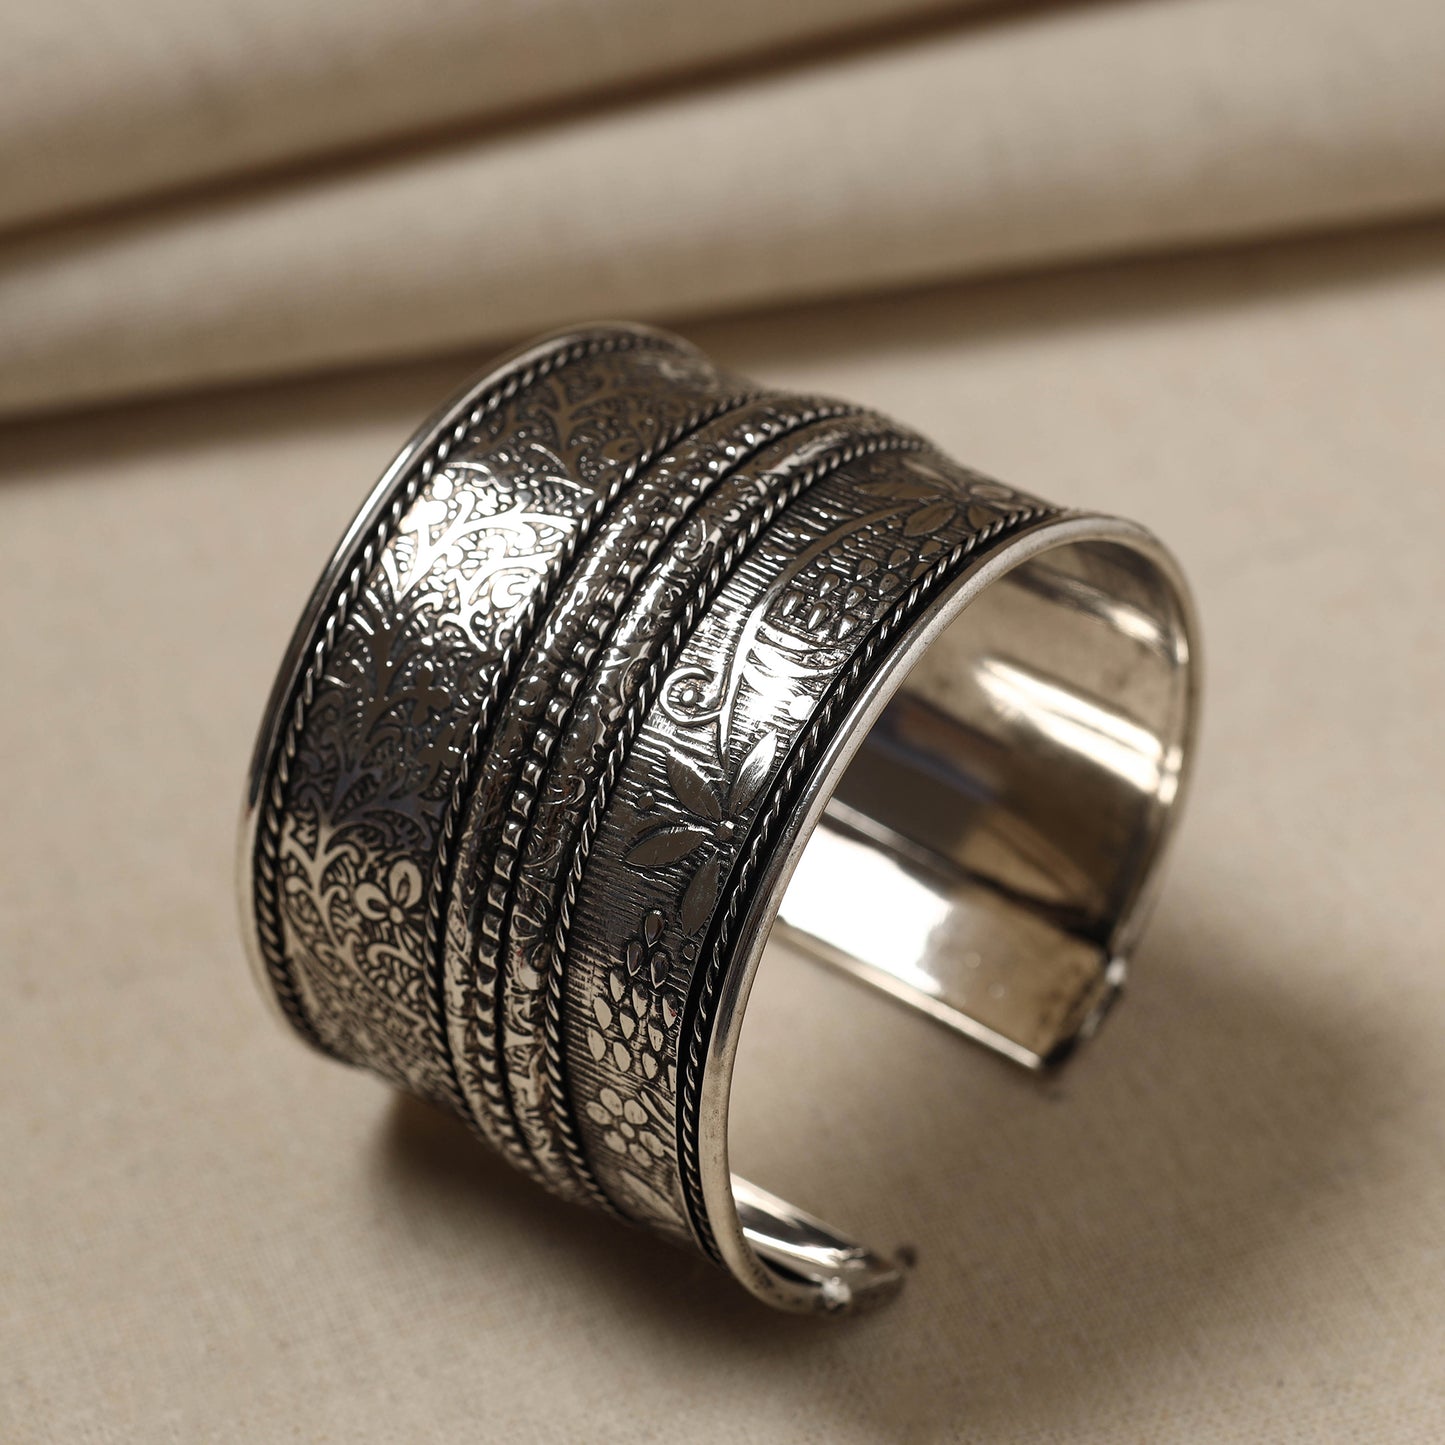 Antique Finish Oxidised German Silver Cuff Bracelet (Adjustable)